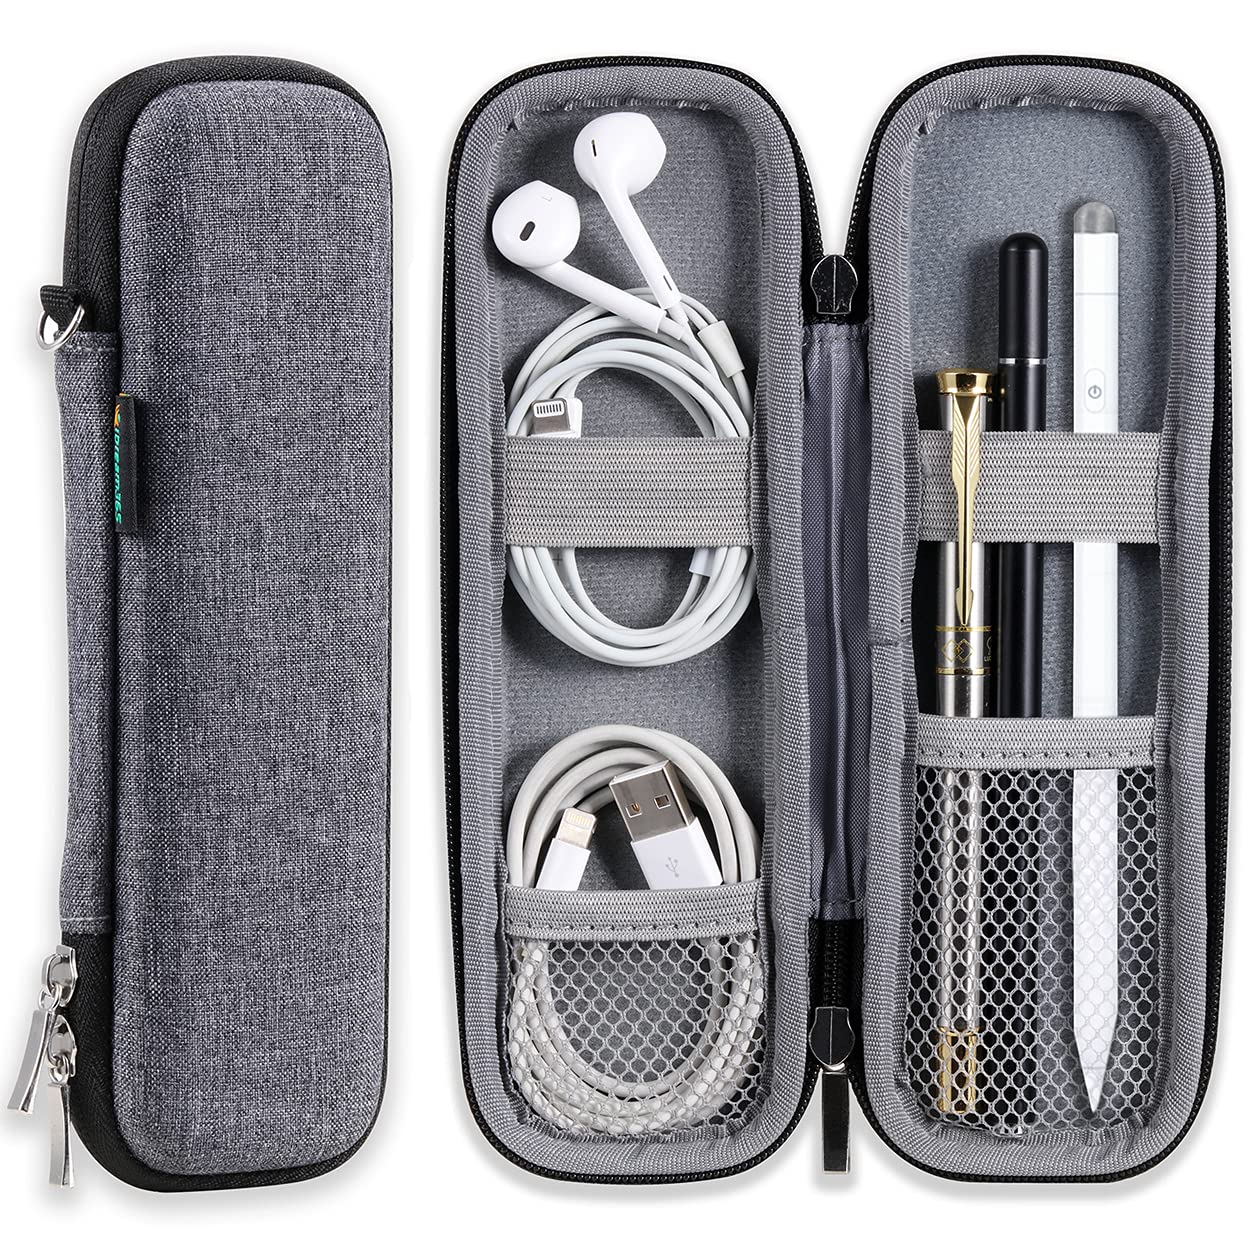 iDream365 Apple Pencil Case Holder,Slim EVA Carrying Case/Bag/Pouch/Holder for Apple Pencils,Executive Fountain Pen,Ballpoint Pen,Stylus Touch Pen-Grey